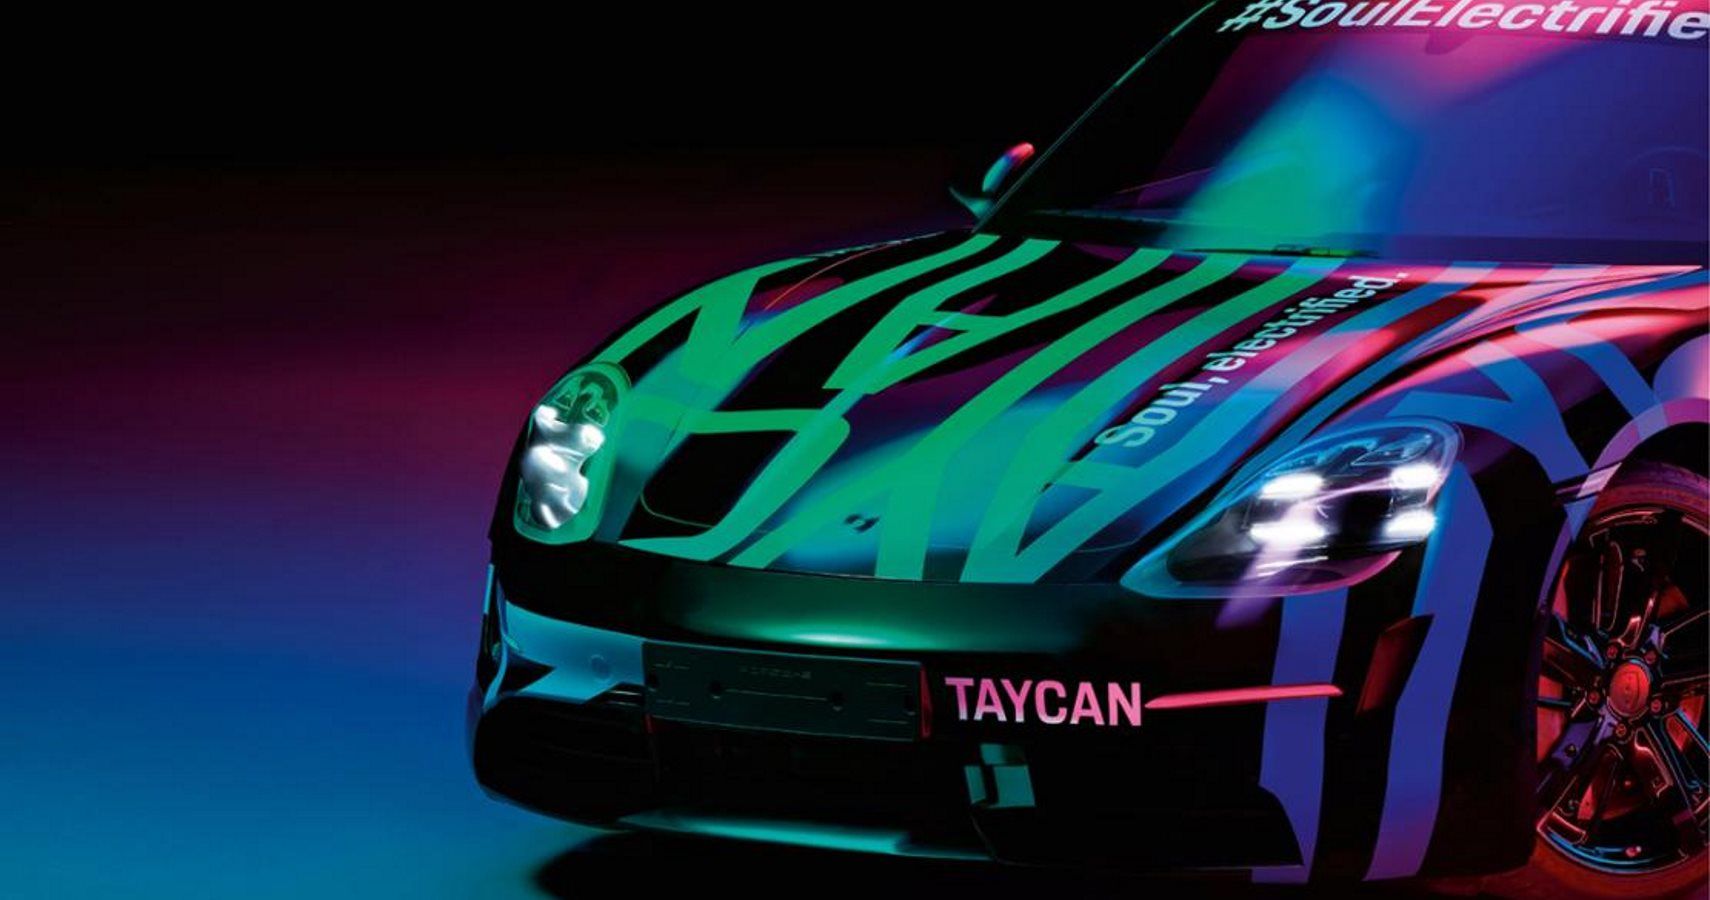 Production Porsche Taycan Teased